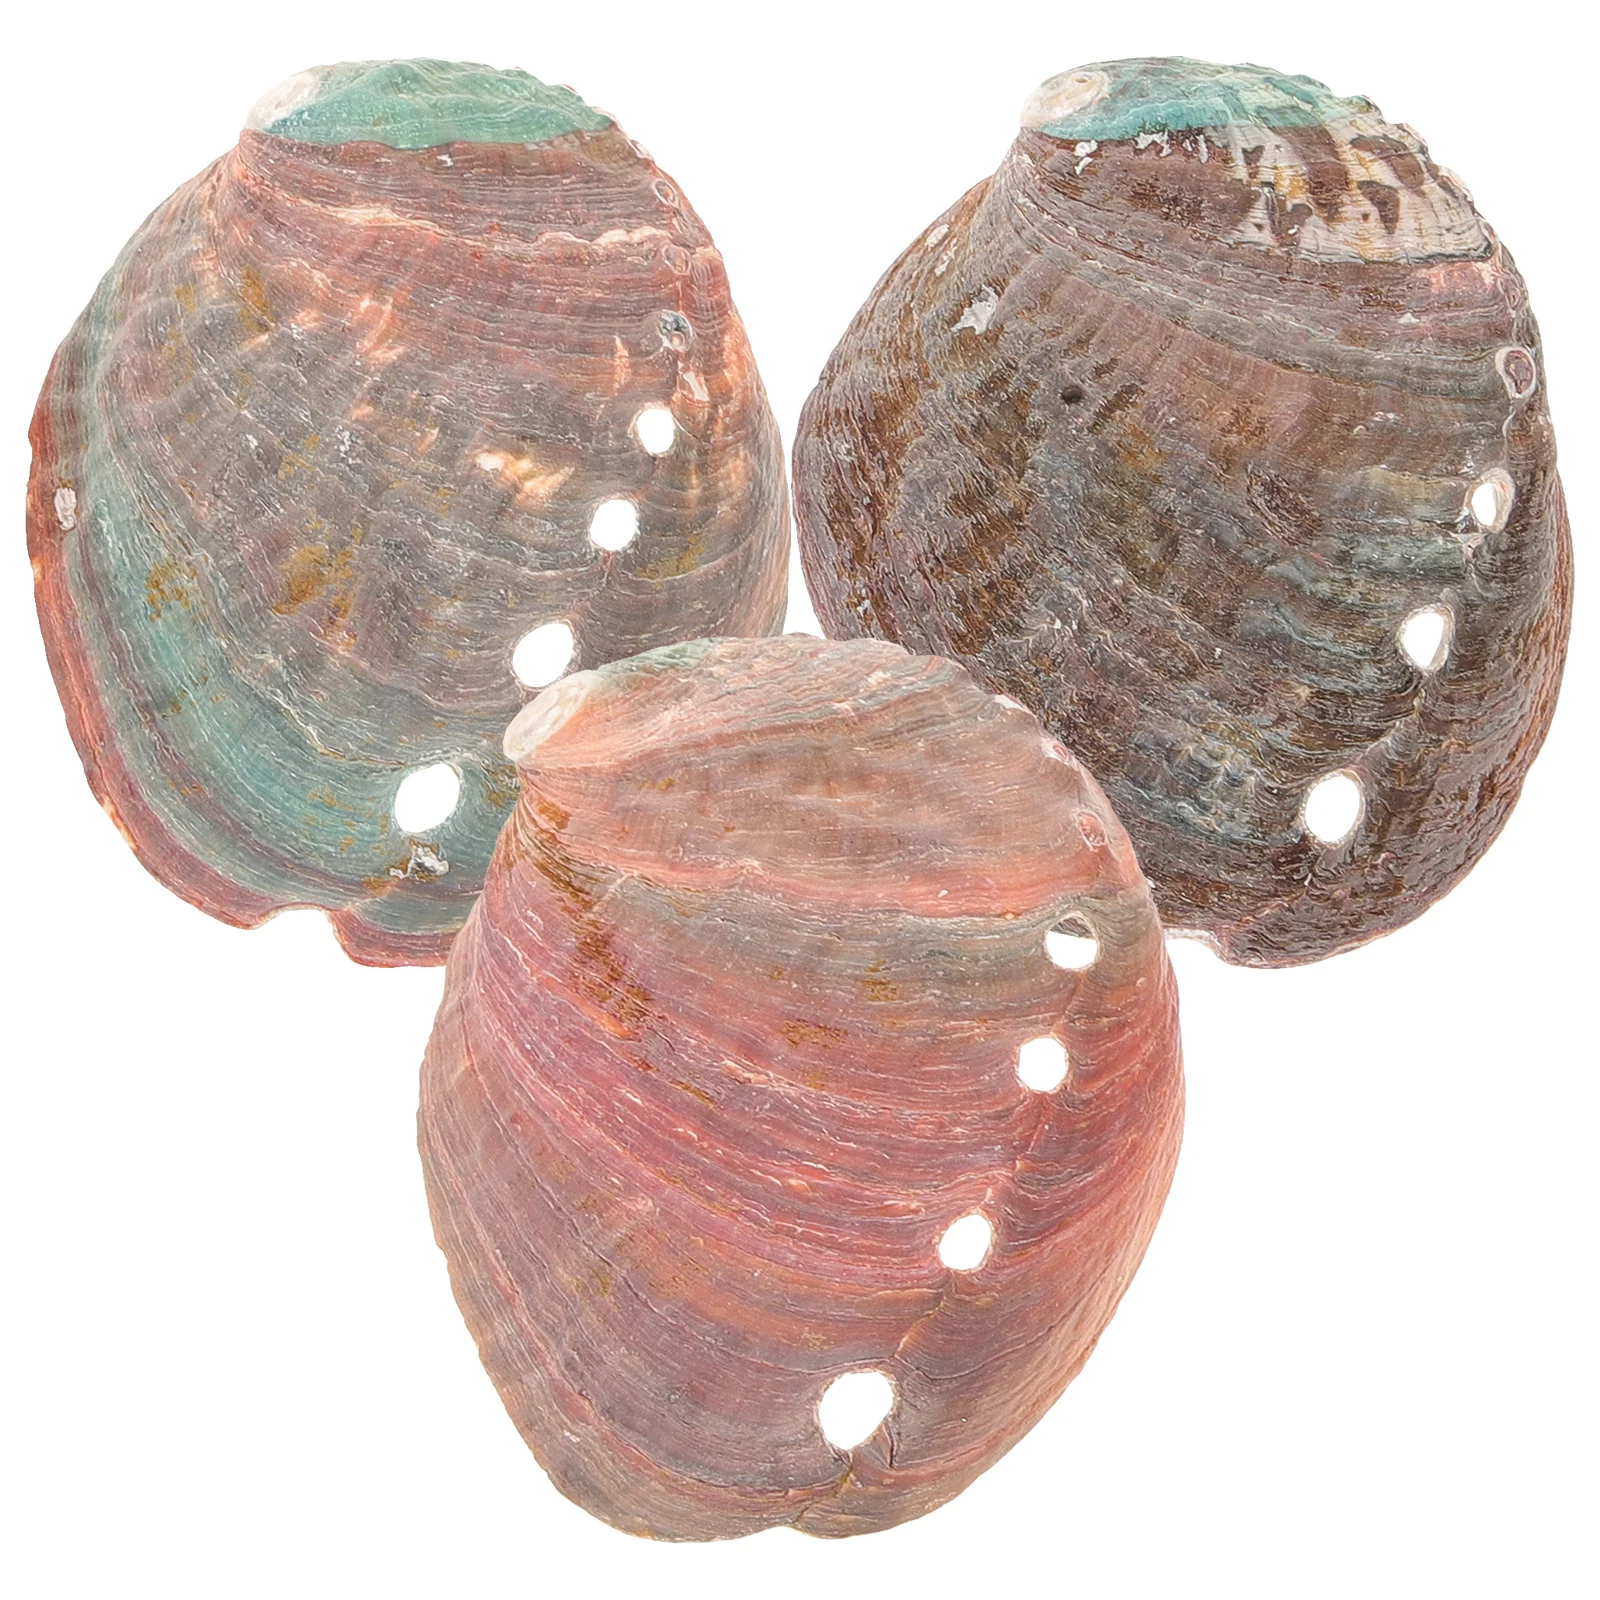 

3 Pcs Fish Aquarium Kit Smudge Stick Holder Abalone Shell Smudging Suite Natural Decor Offering Bowl